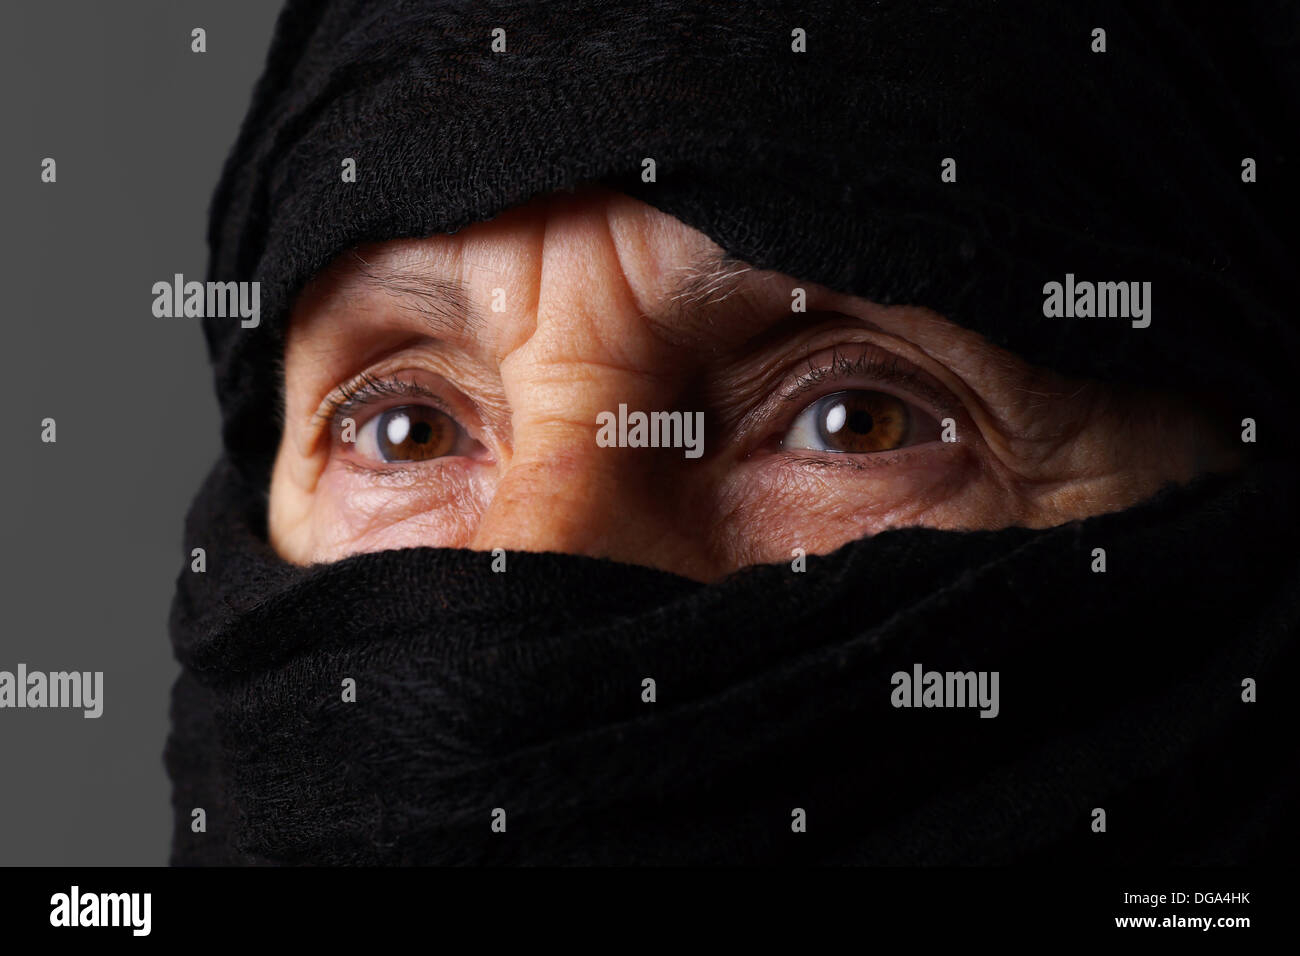 Eyes of senior muslim woman with niqab Stock Photo